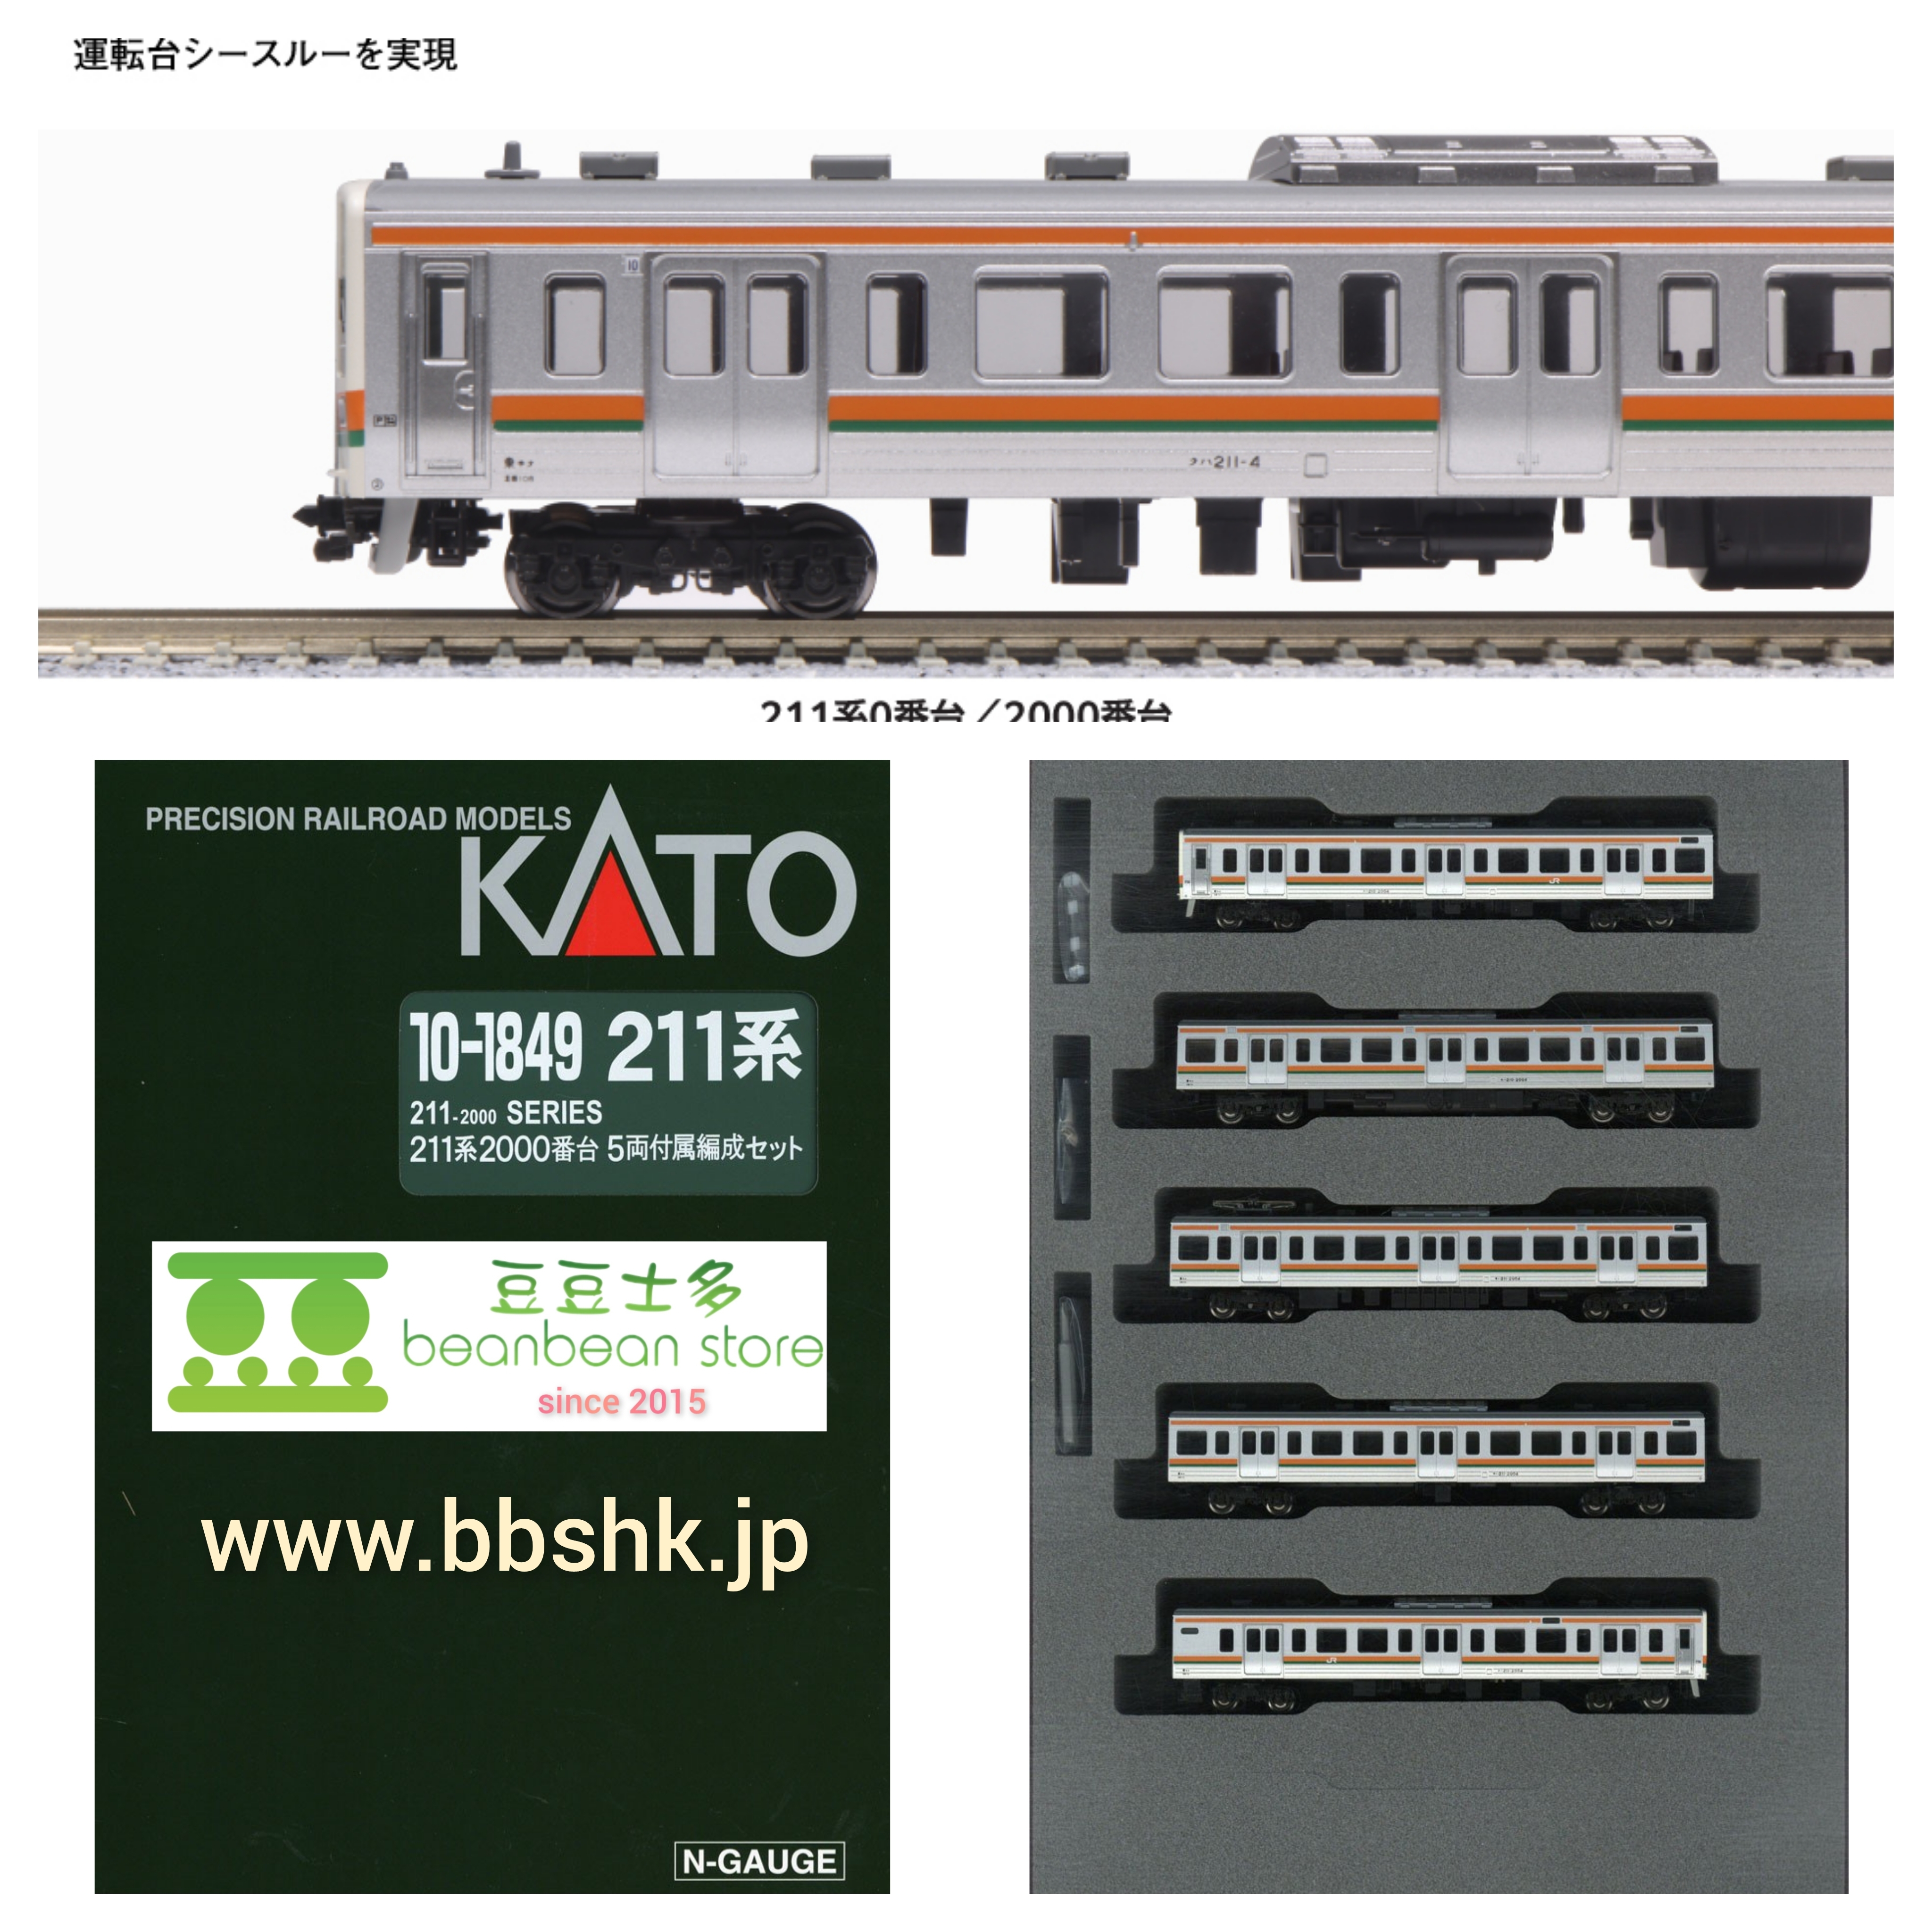 KATO 10-1849 211系2000番台 5両付属編成